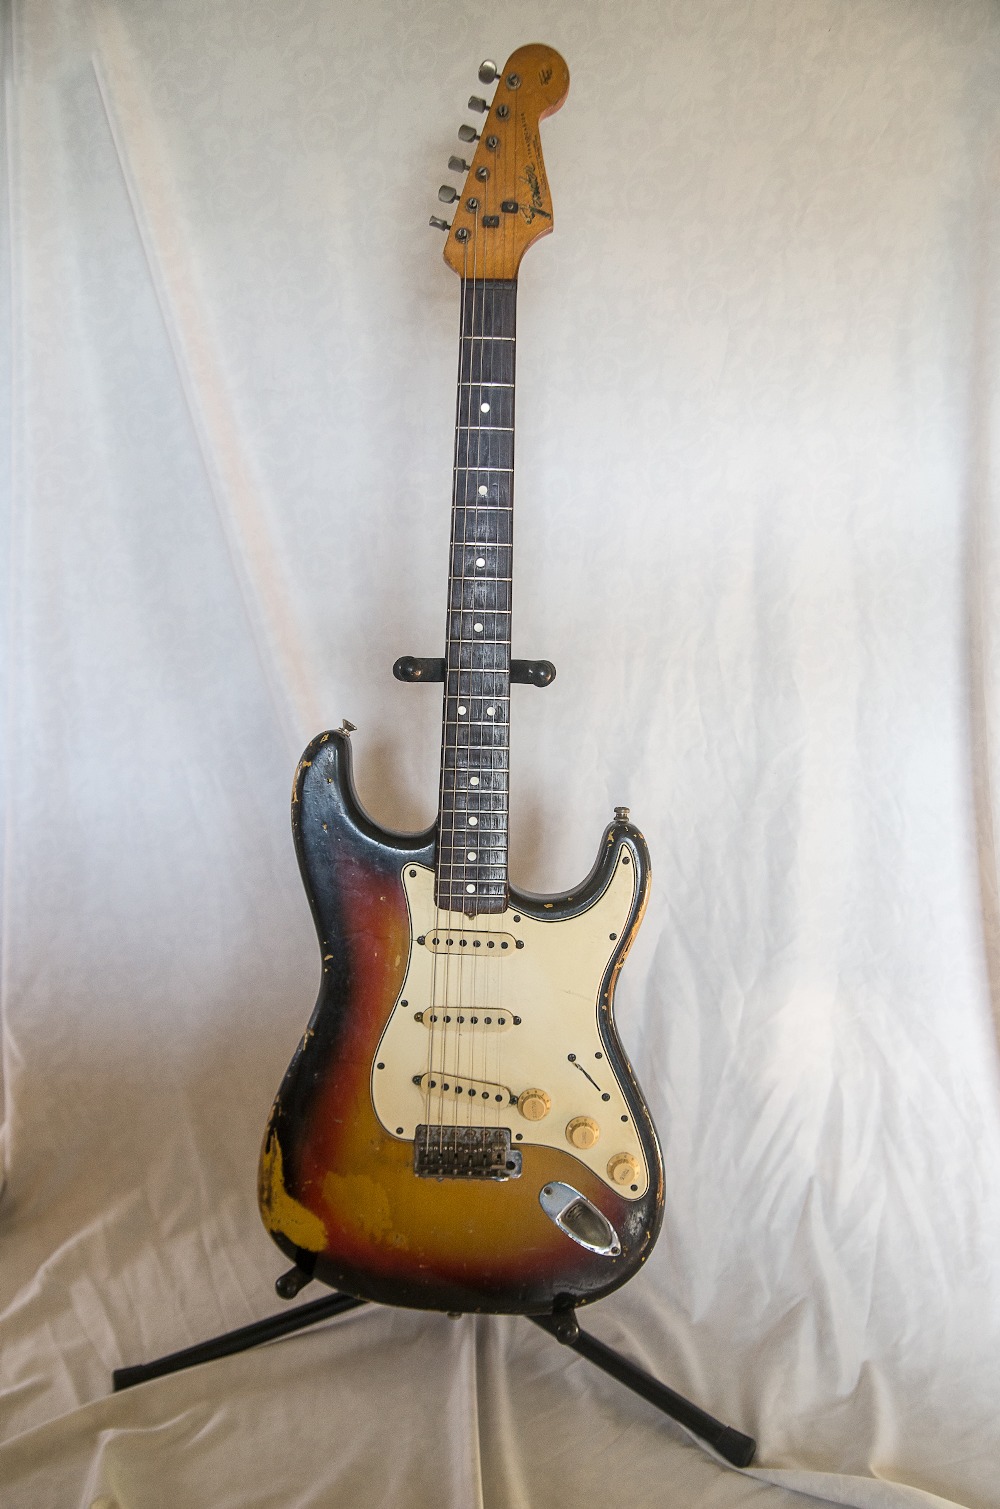 Jimi Hendrix’s 1964 Fender Stratocaster. The last remaining legitimate Jimi Hendrix owned guitar out